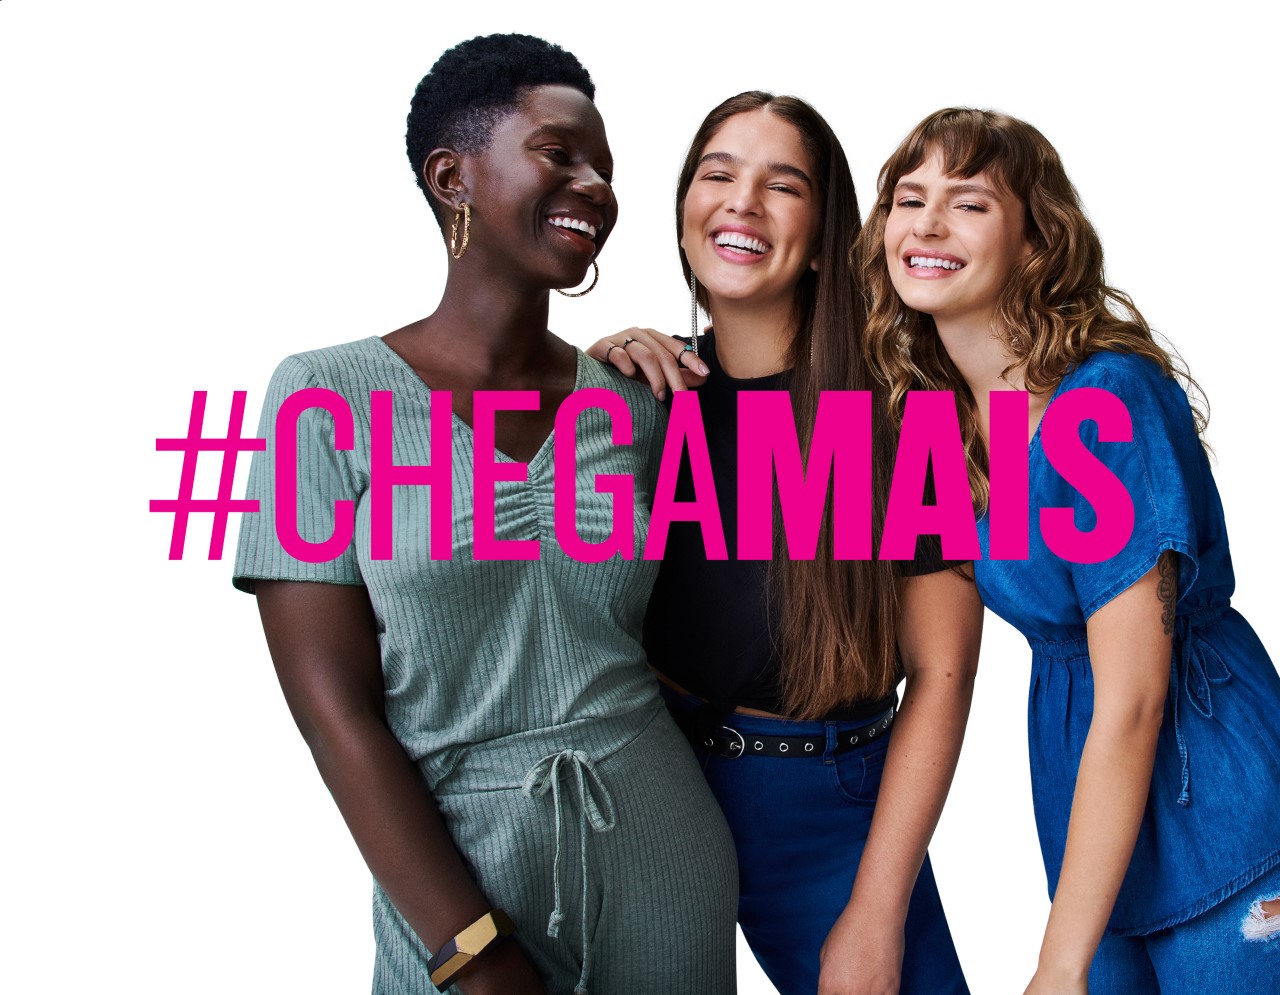 Marisa apresenta #ChegaMais, movimento que consolida novo momento da marca